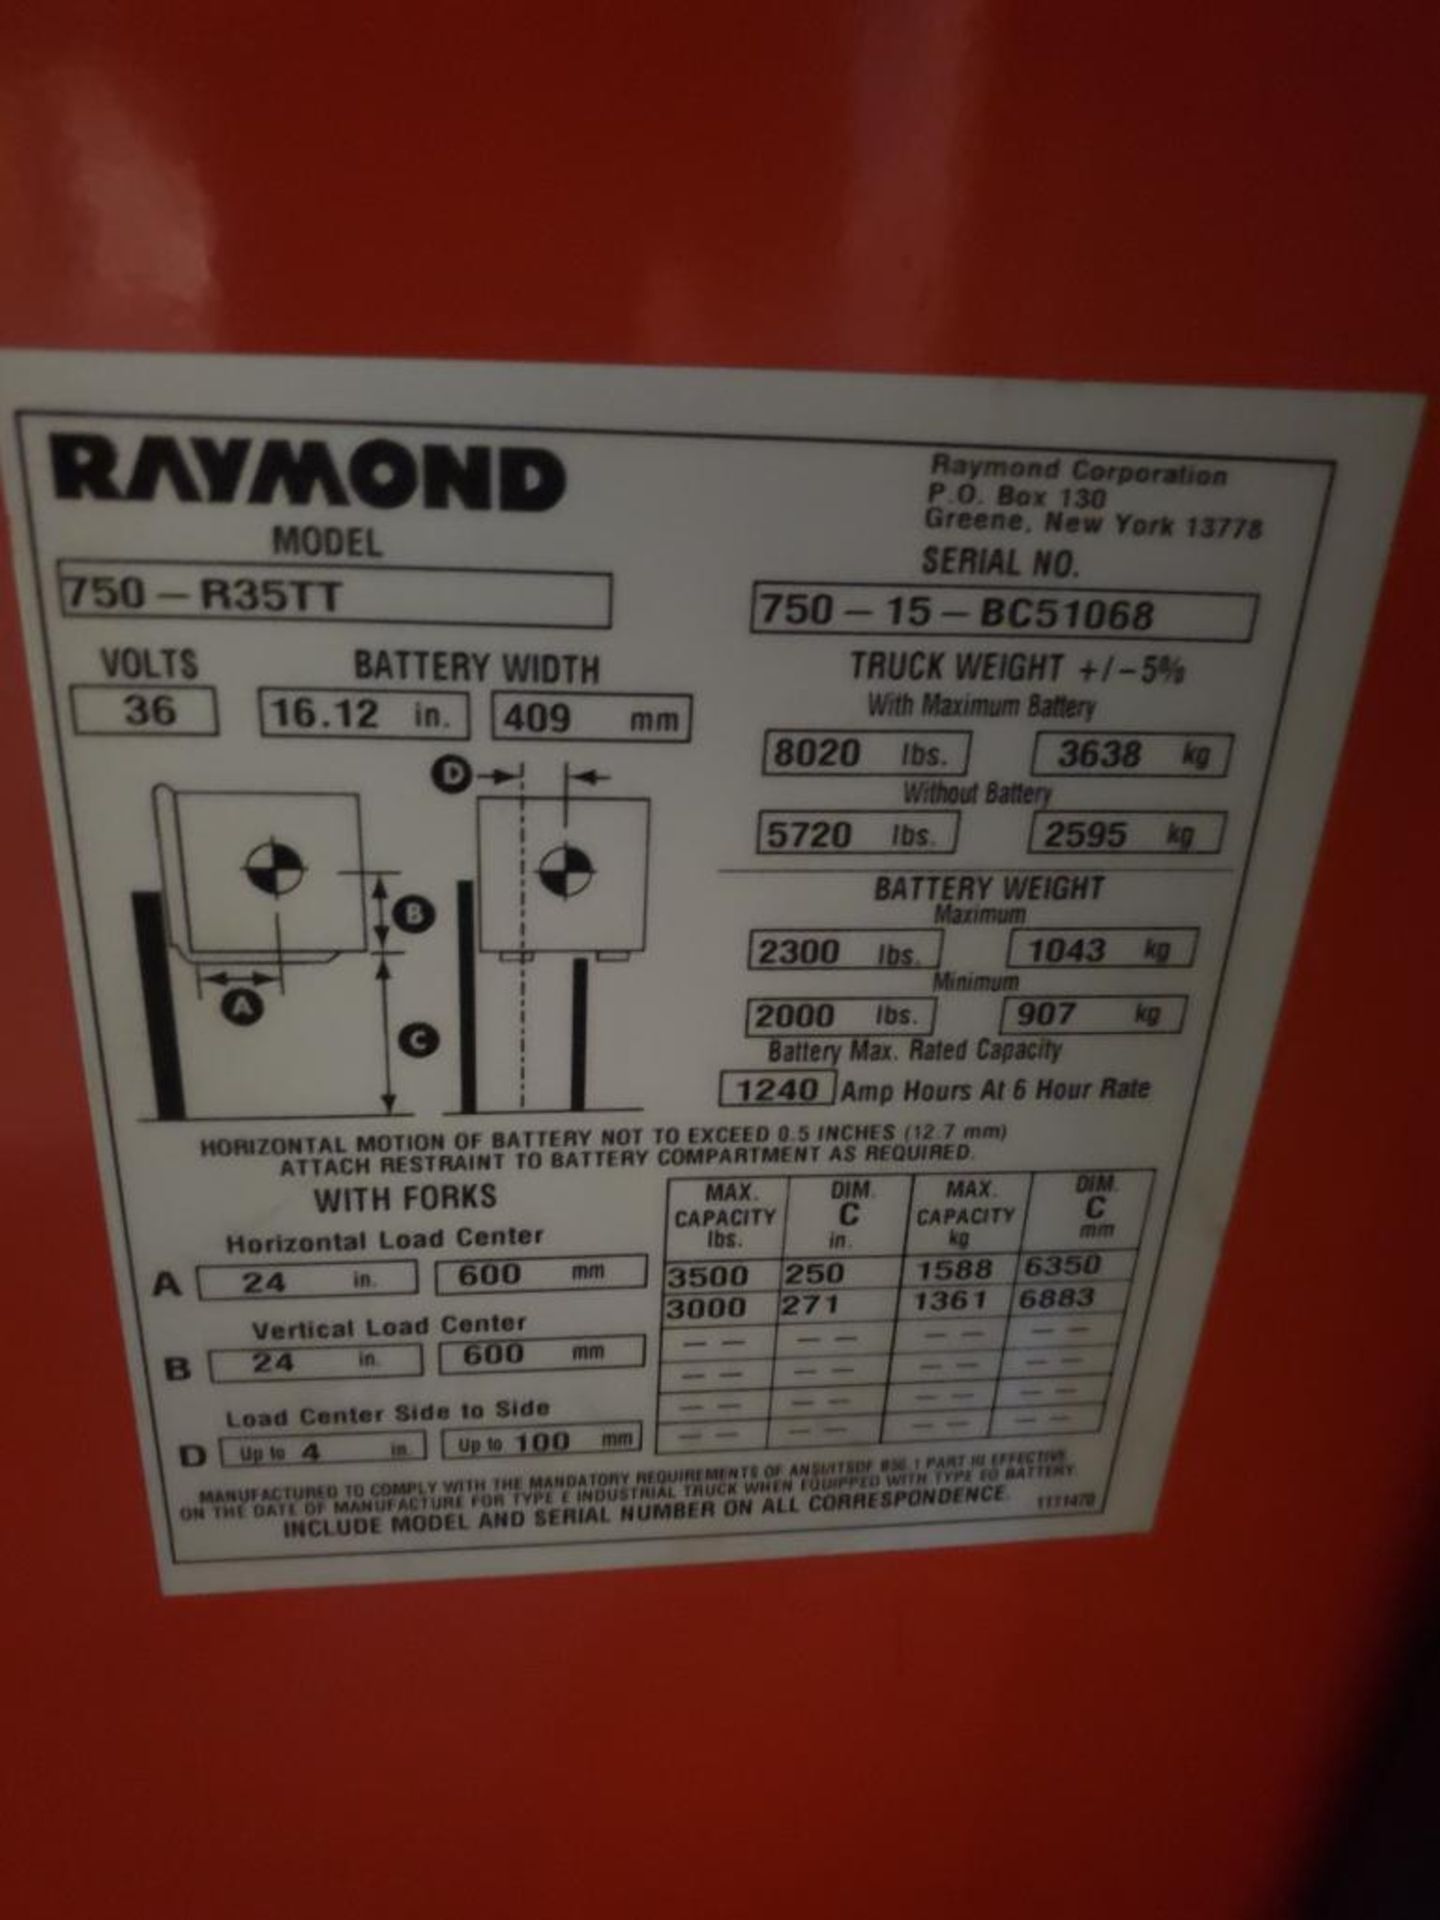 2015 RAYMOND 3,500 LB. CAPACITY REACH TRUCK; MODEL 750-R35TT, S/N 750-15-BC51068, 271'' LIFT HEIGHT, - Image 7 of 7